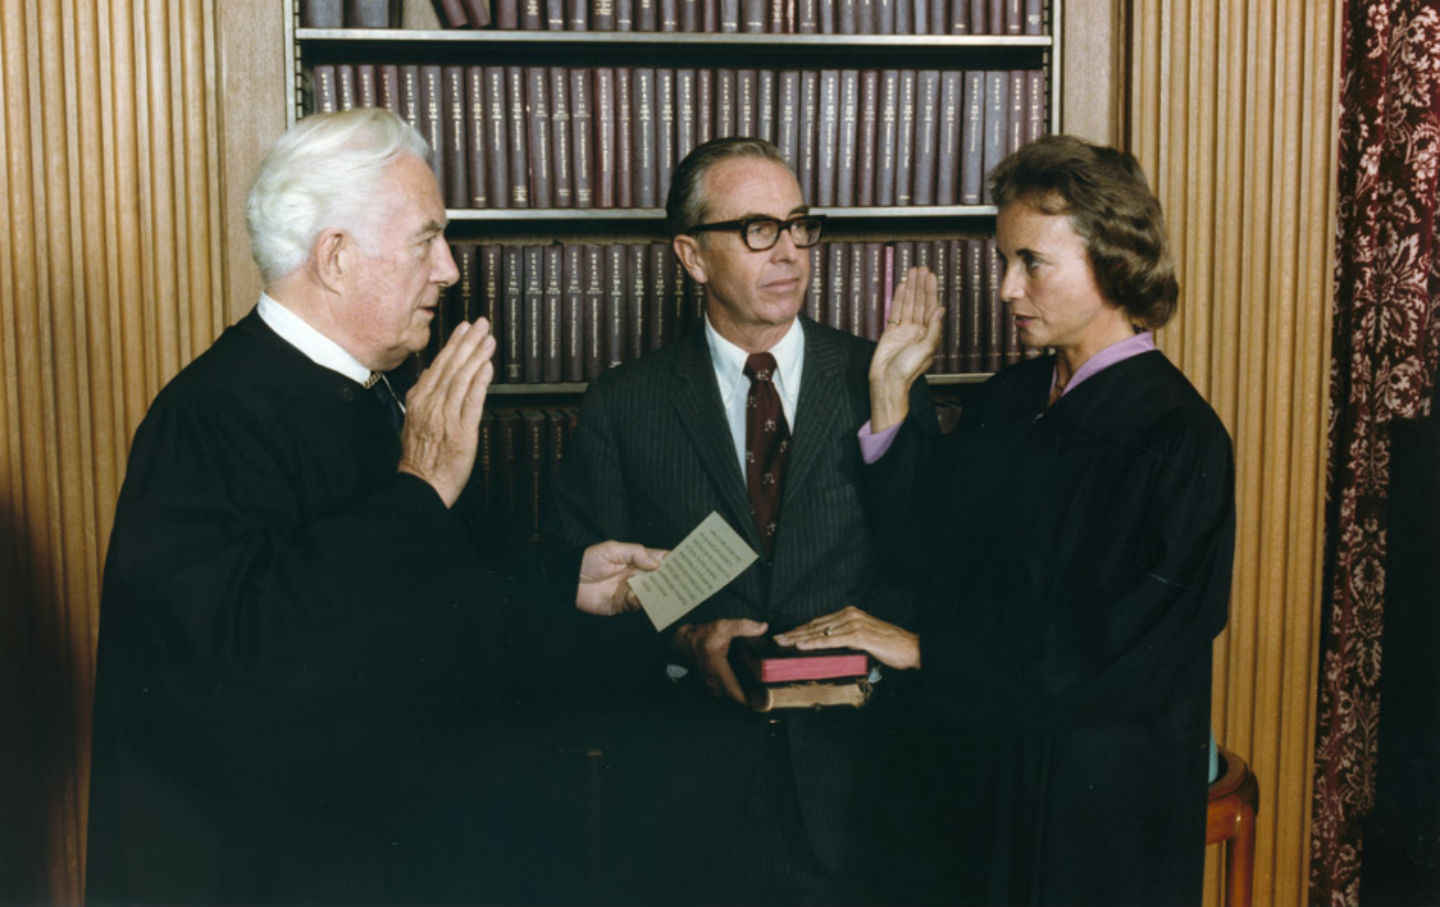 Supreme Court Sandra Day OConnor 8x10 Silver Halide Photo Print